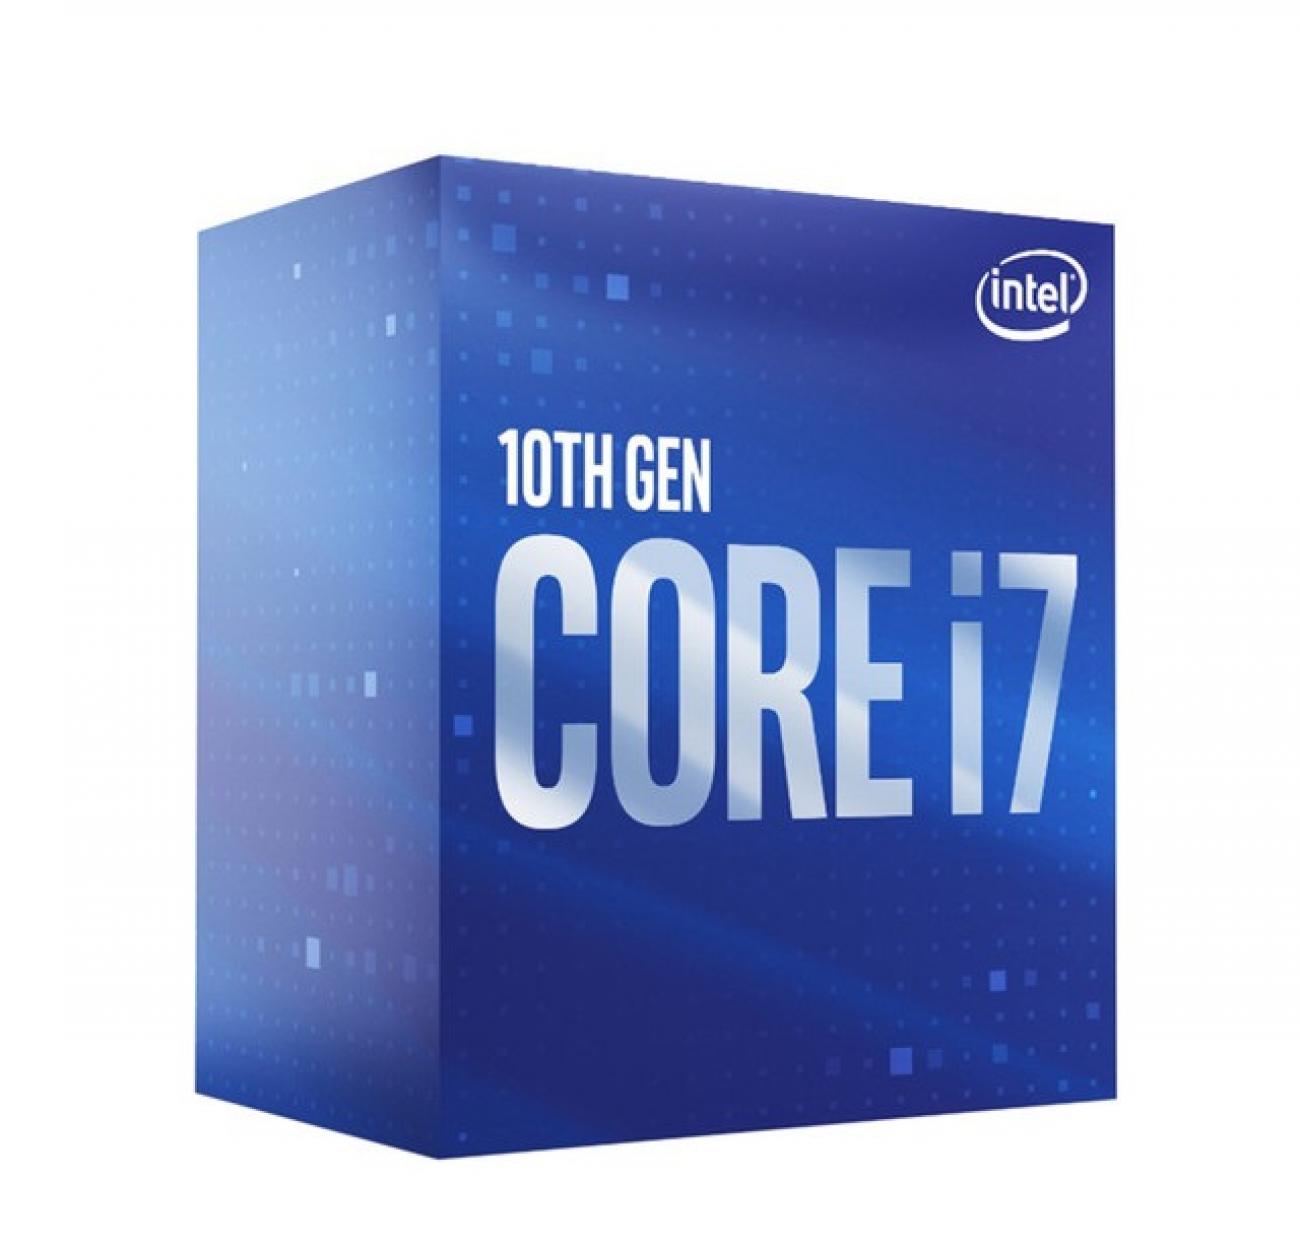 INTEL CPU 10TH GEN, I7-10700KF, LGA1200, 3.80GHz 16MB CACHE BOX, COMET LAKE, NO FAN